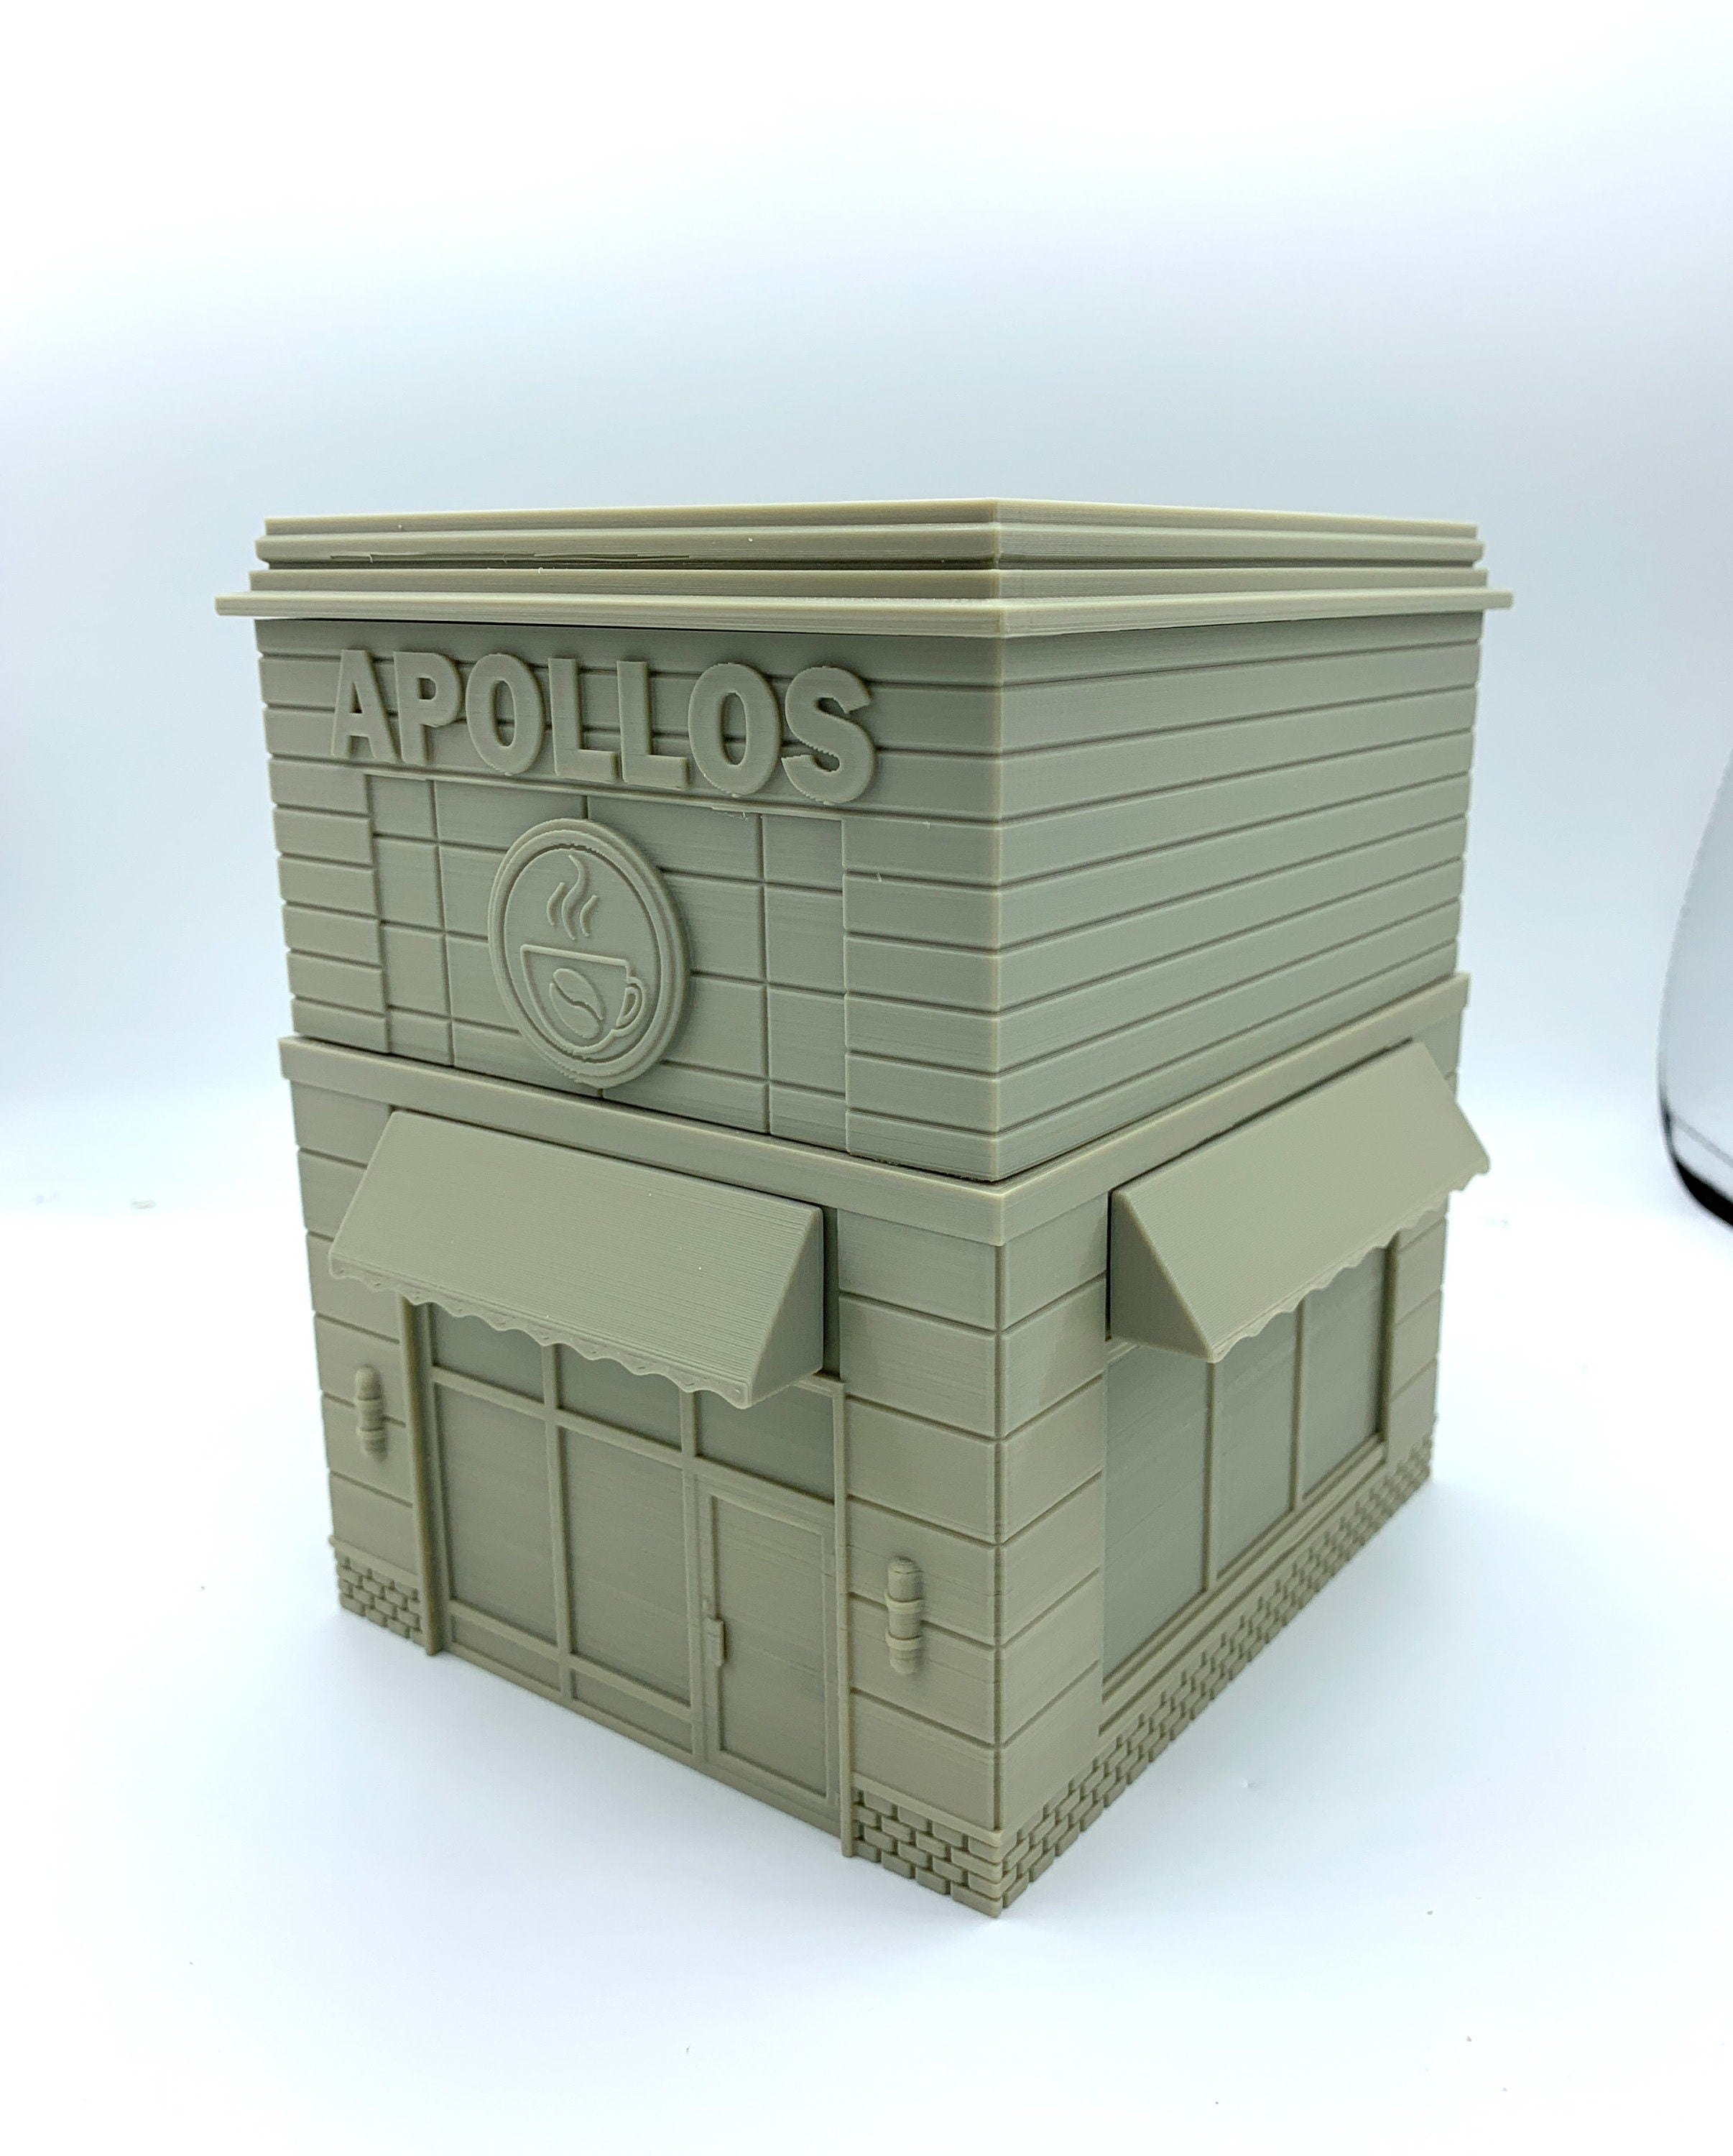 Apollos Coffee Shop / Crisis Protocol Compatible Option / Corvus Games Terrain Licensed Printer / Print to Order